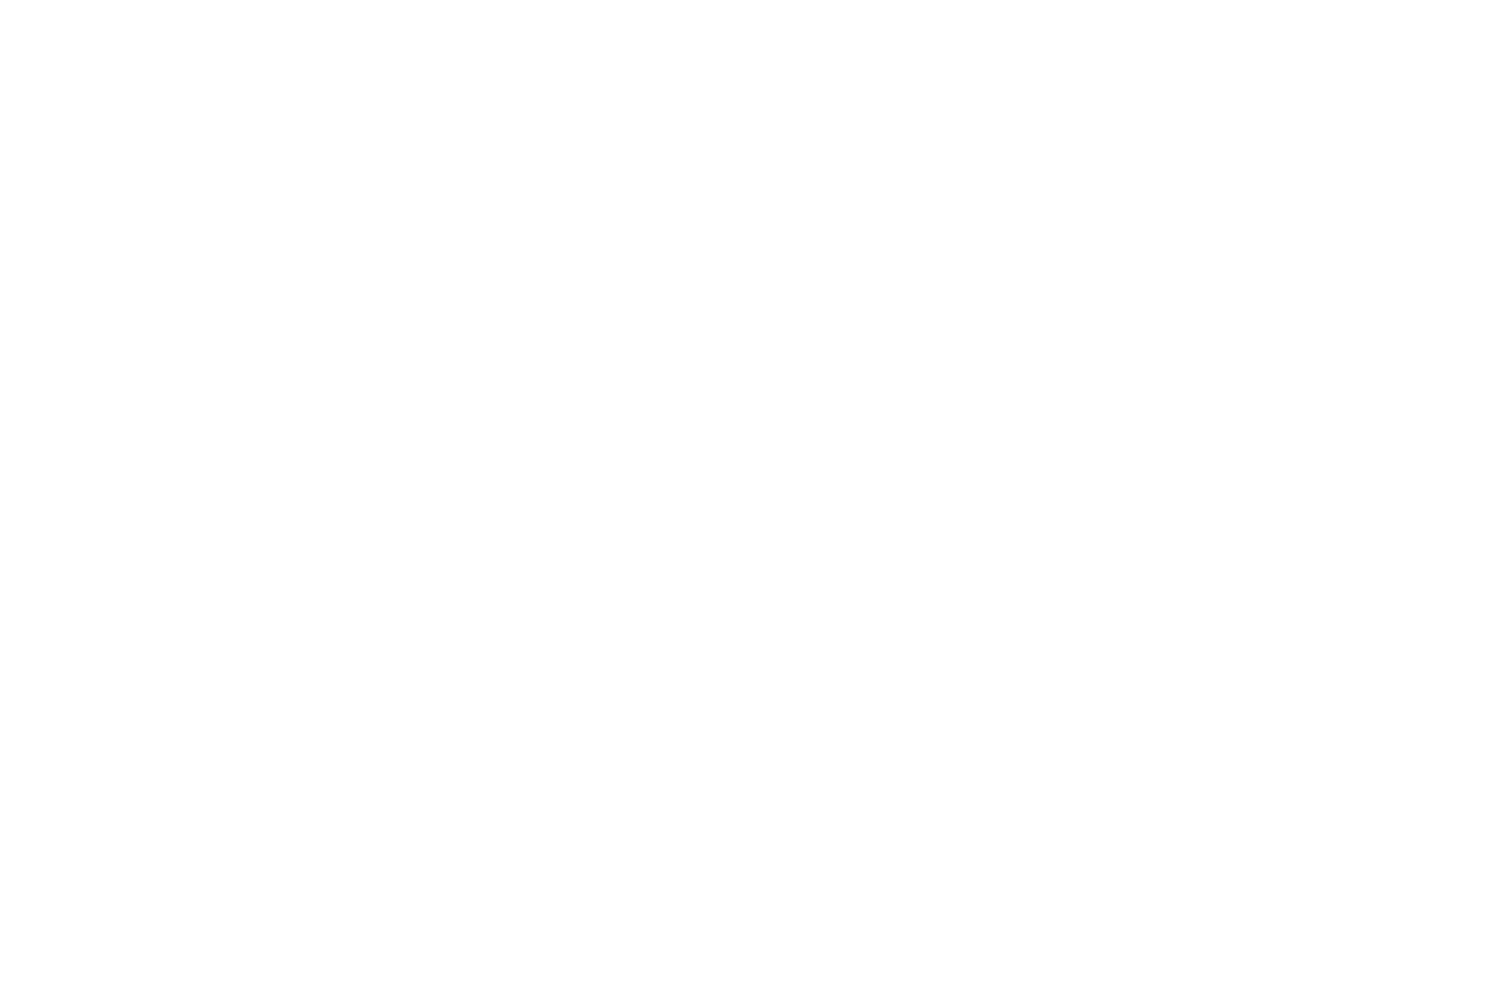 Daniel Brian Salon